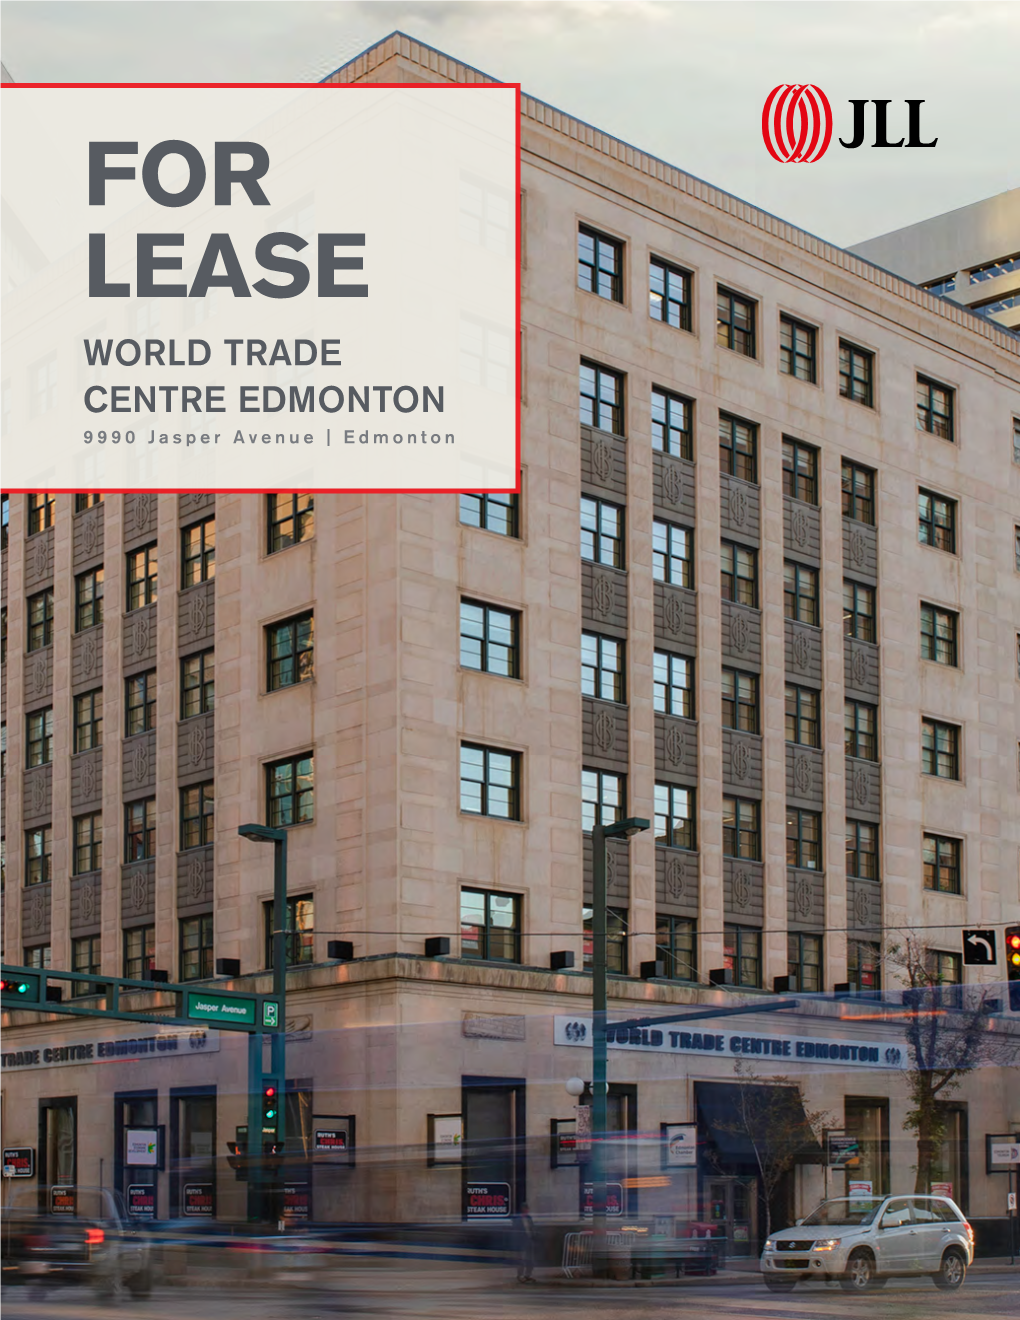 FOR LEASE WORLD TRADE CENTRE EDMONTON 9990 Jasper Avenue | Edmonton